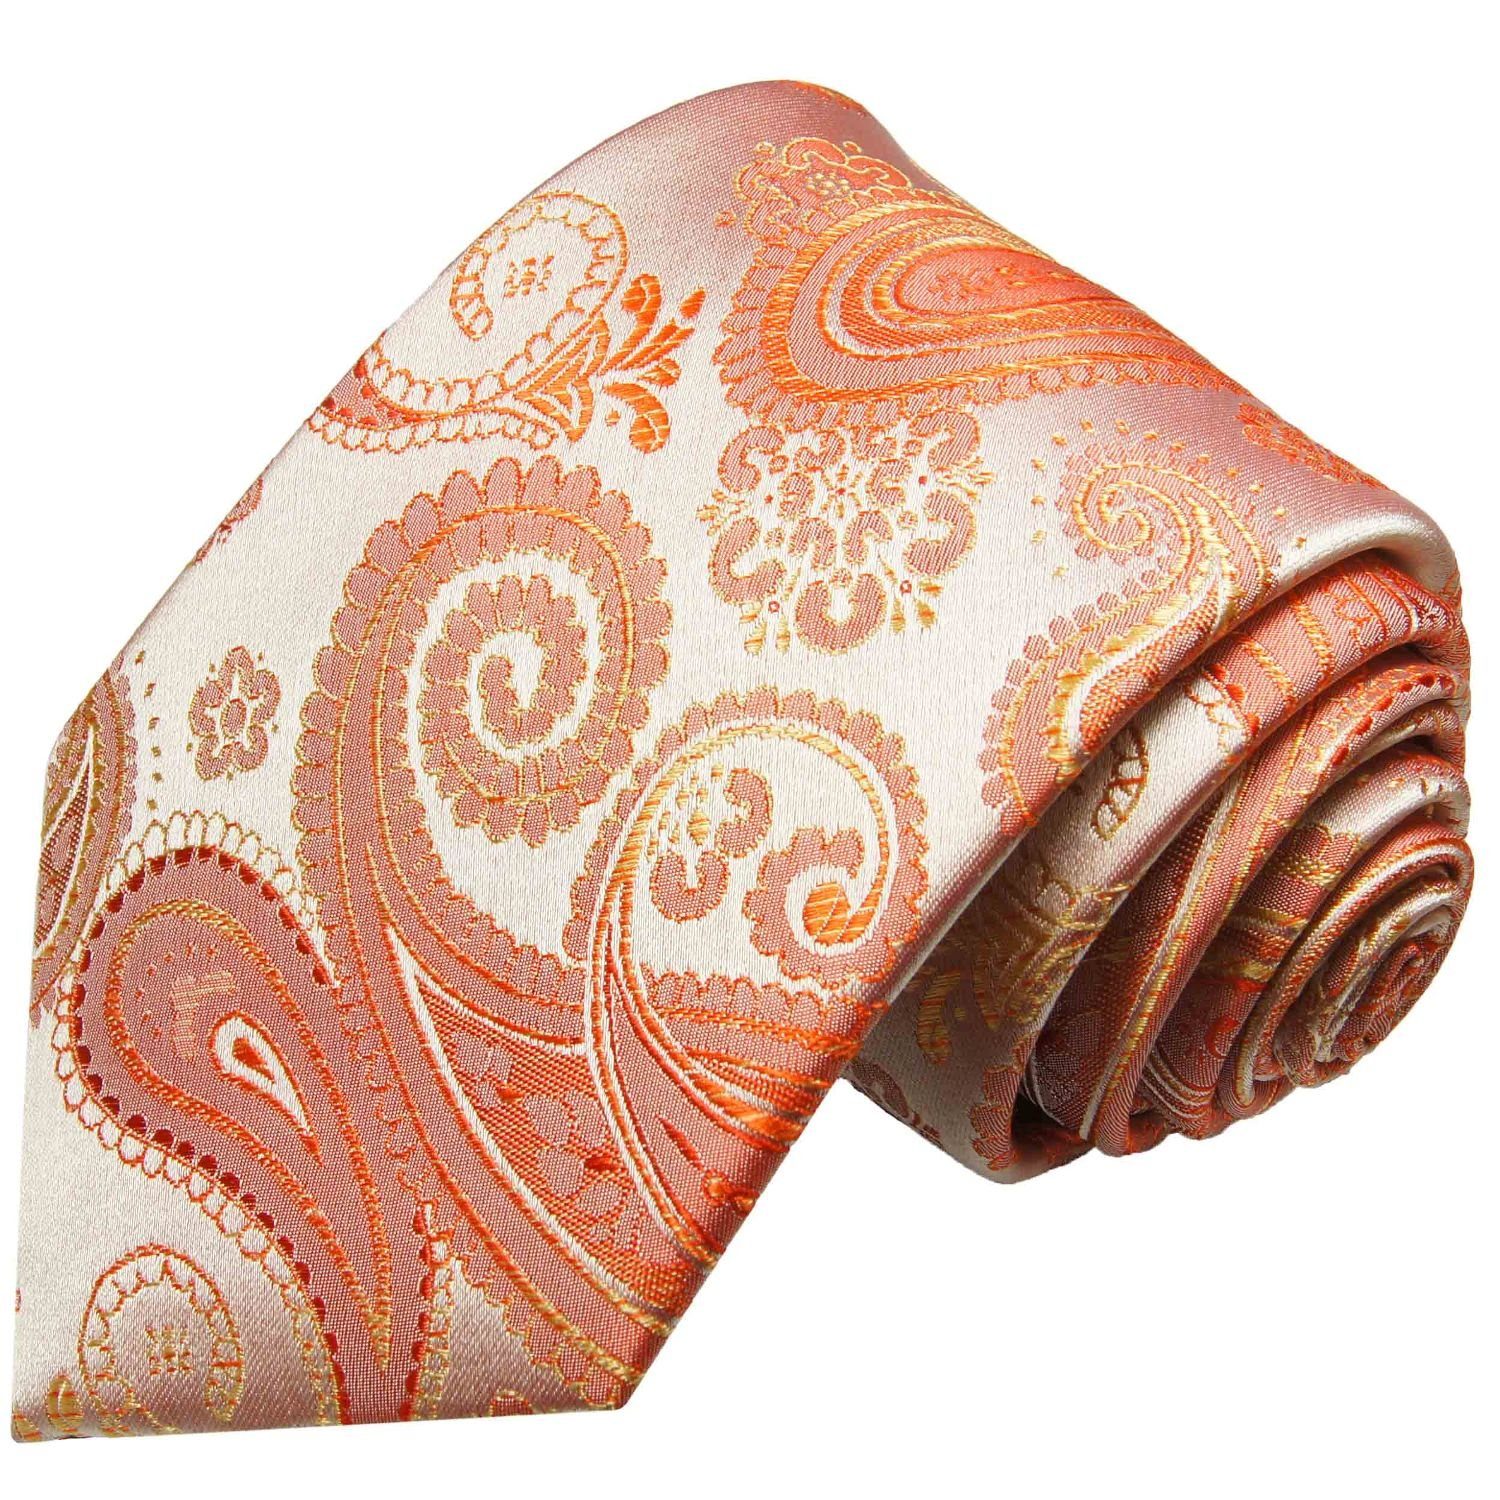 Paul Malone Krawatte Herren Seidenkrawatte Schlips elegant paisley brokat 100% Seide Schmal (6cm), koralle 871 | Breite Krawatten